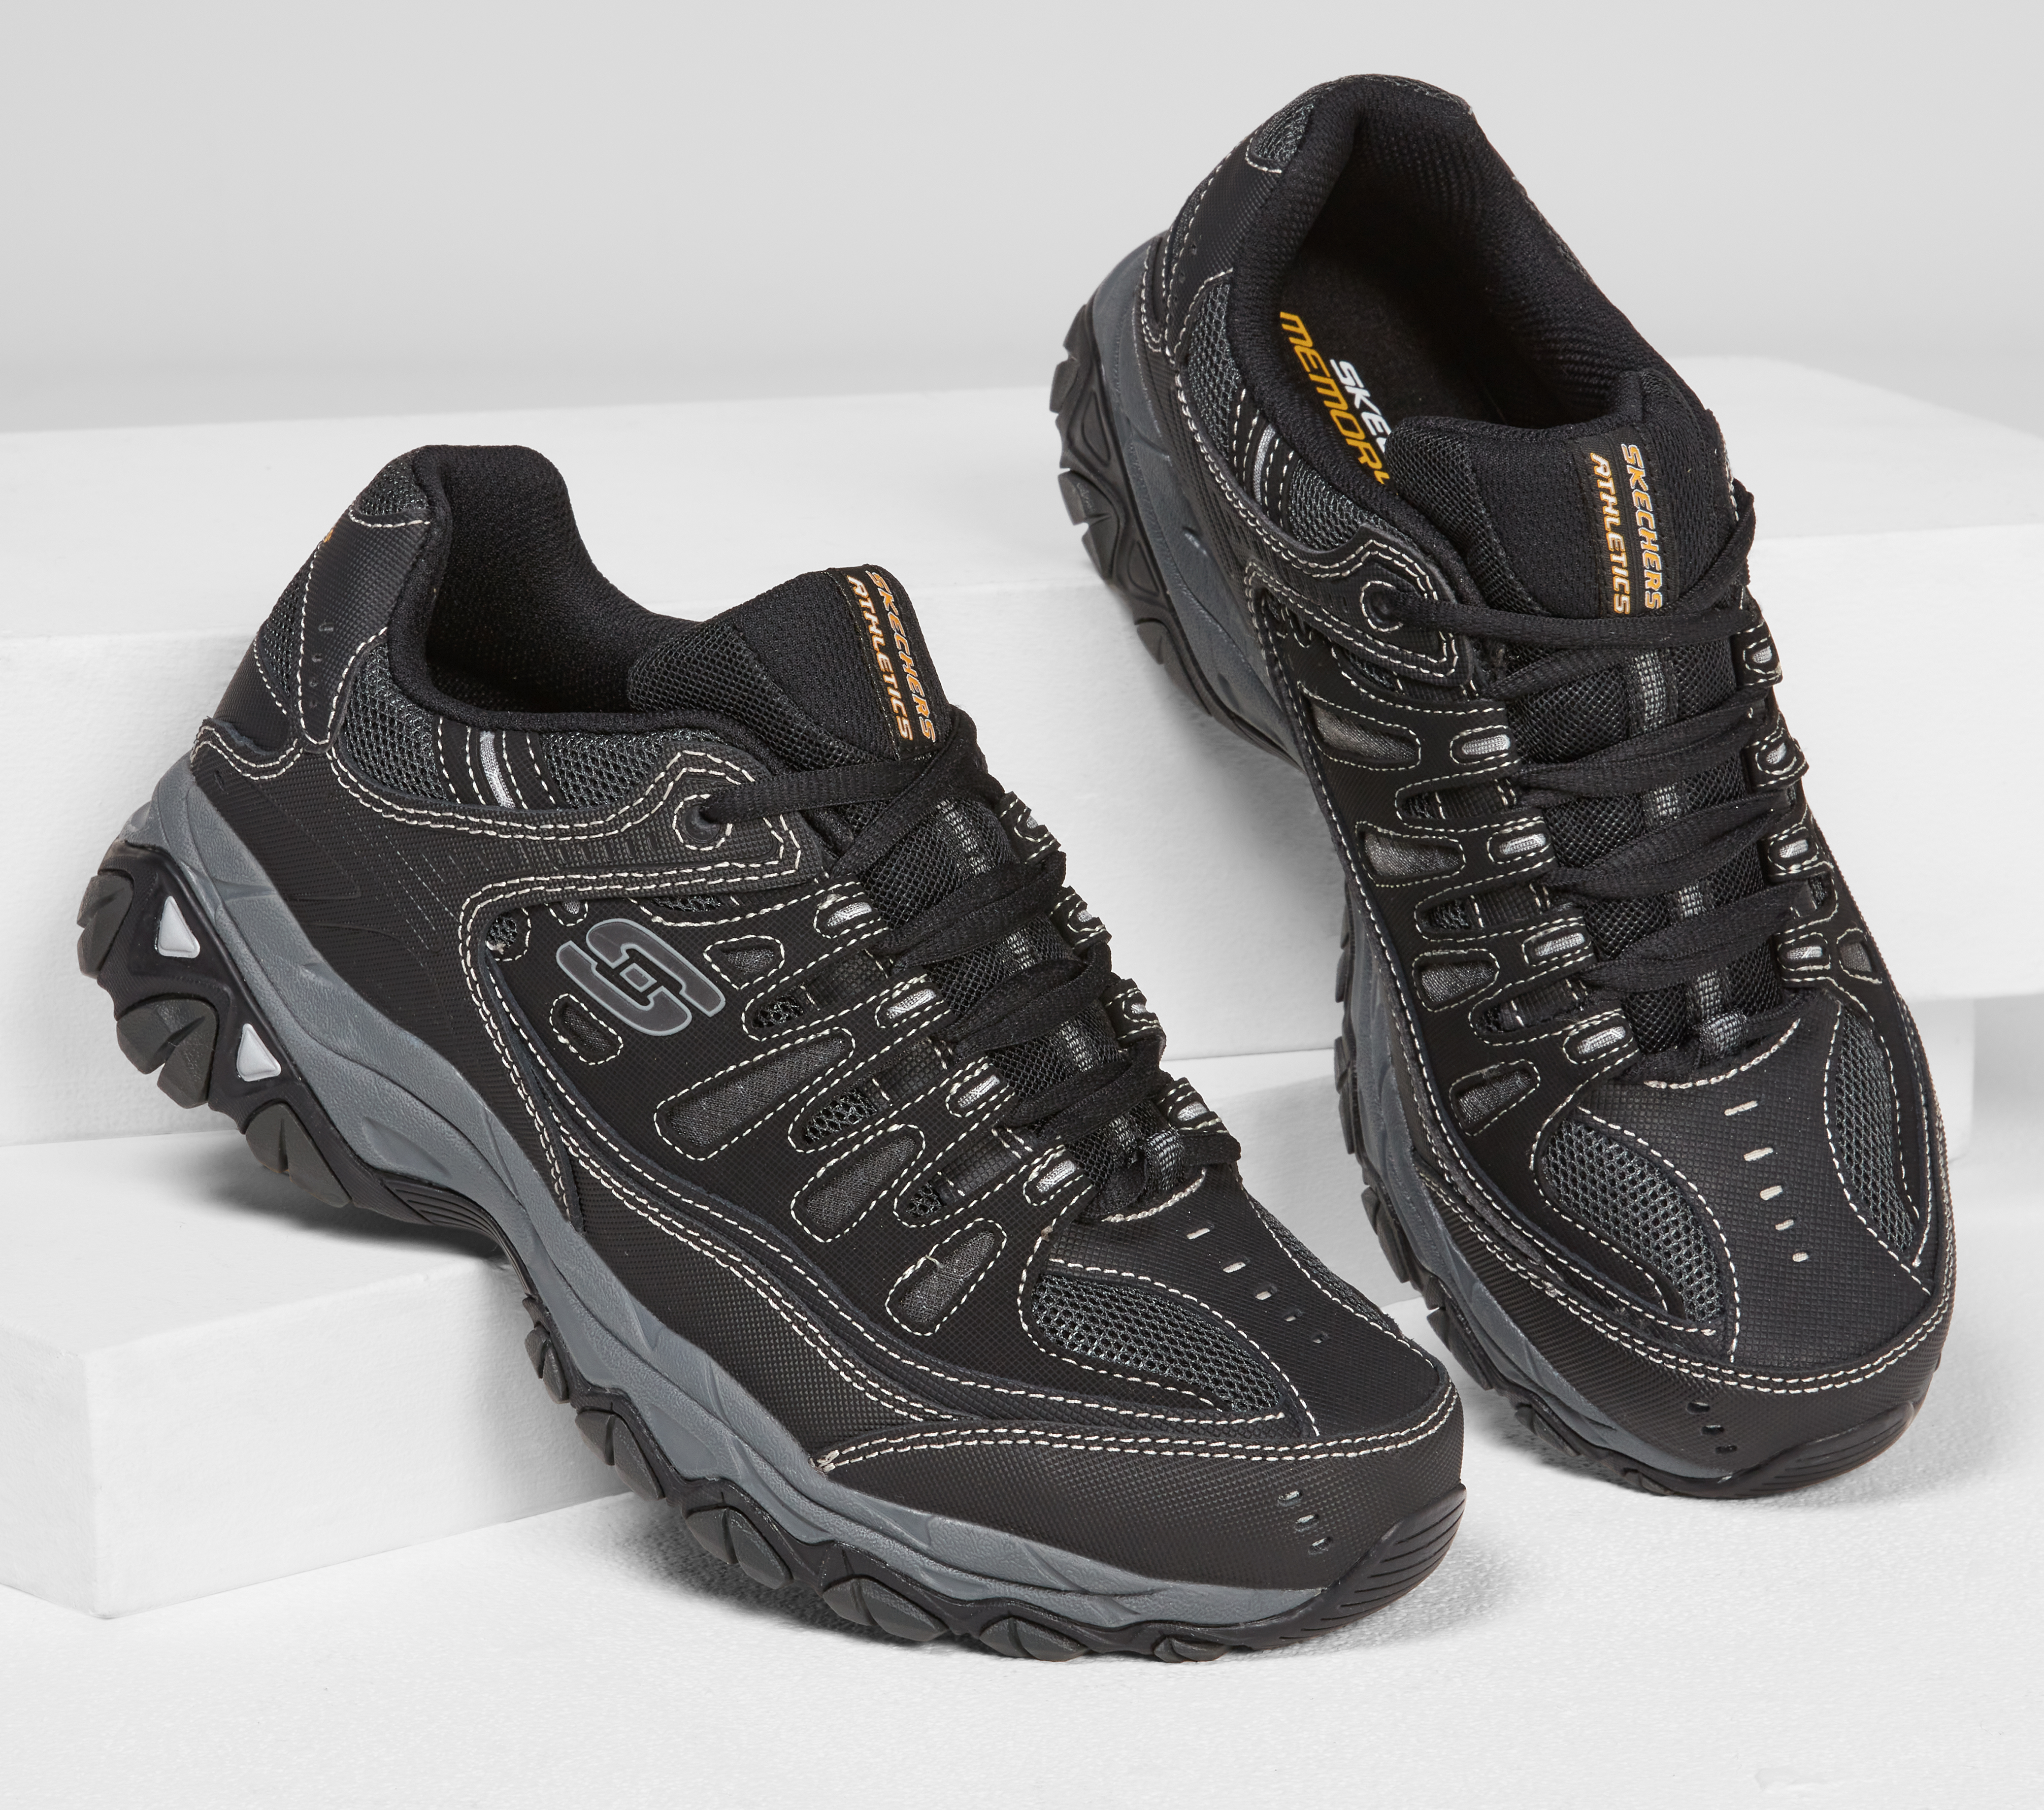 Skechers Men's After Burn - Memory Fit Sneakers, Black/Charcoal, 10.5